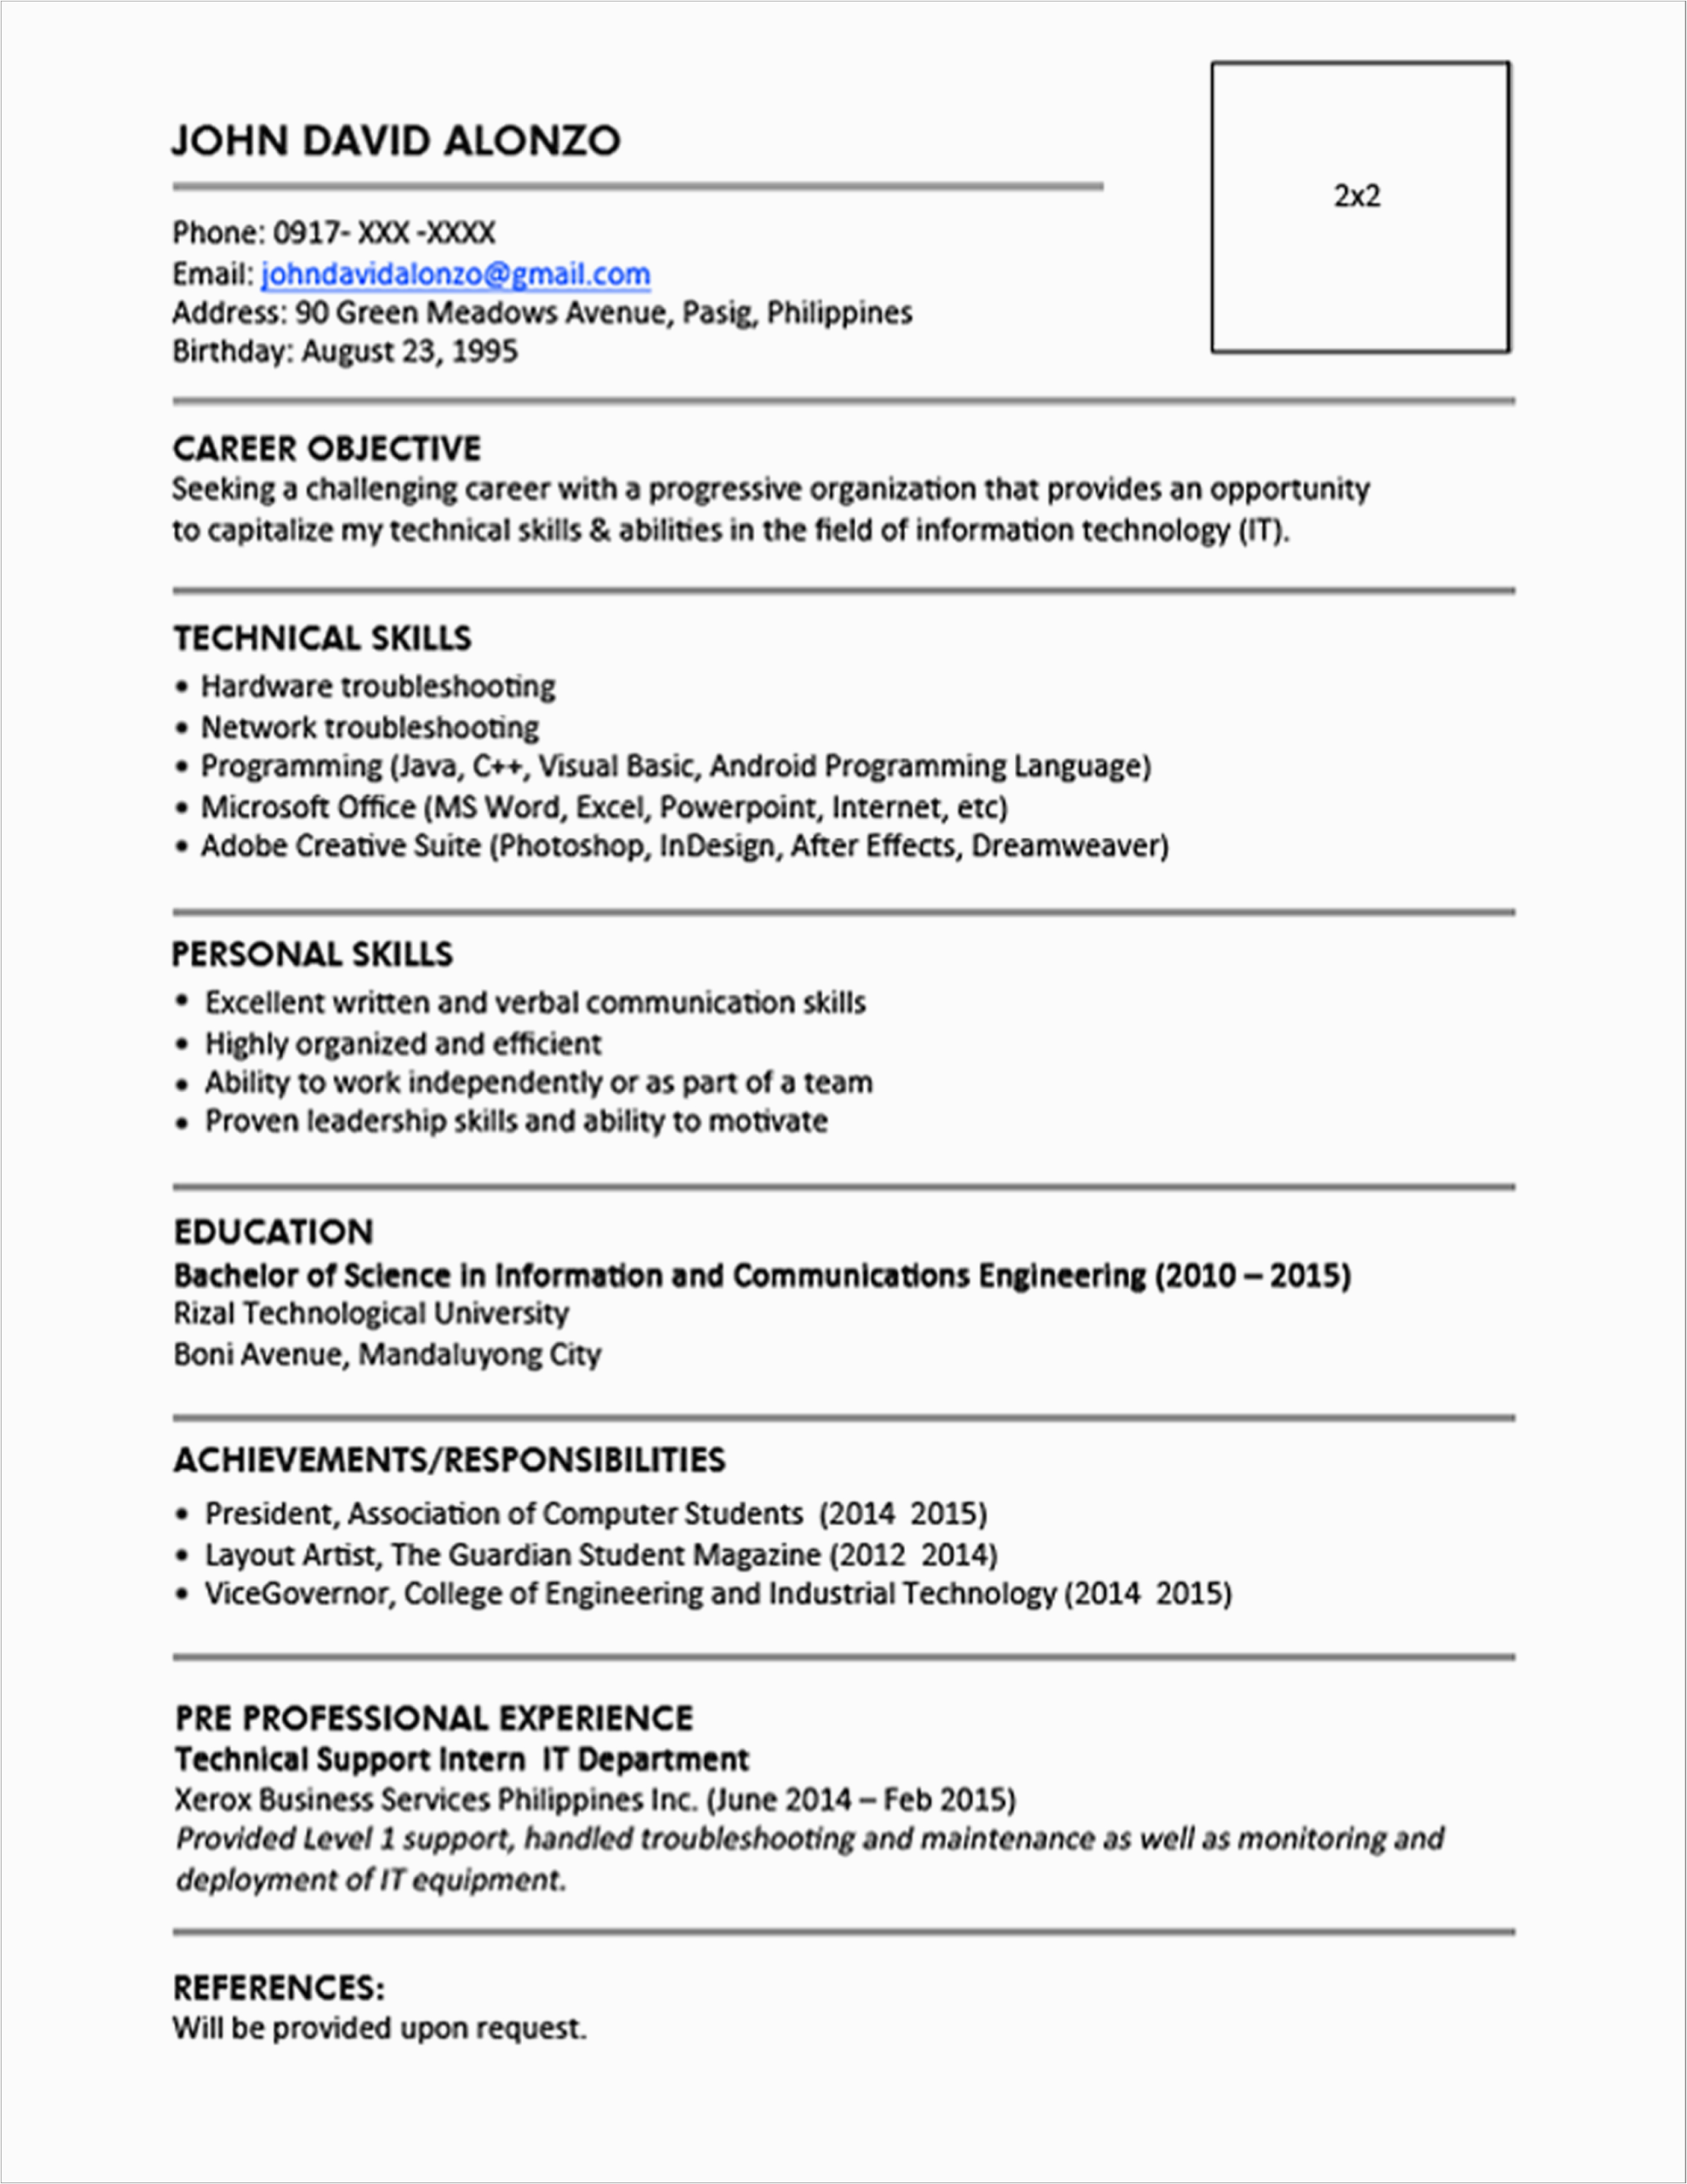 Sample Functional Resume for Fresh Graduate Fresh Graduate Engineering Resume Sample Best Resume Examples